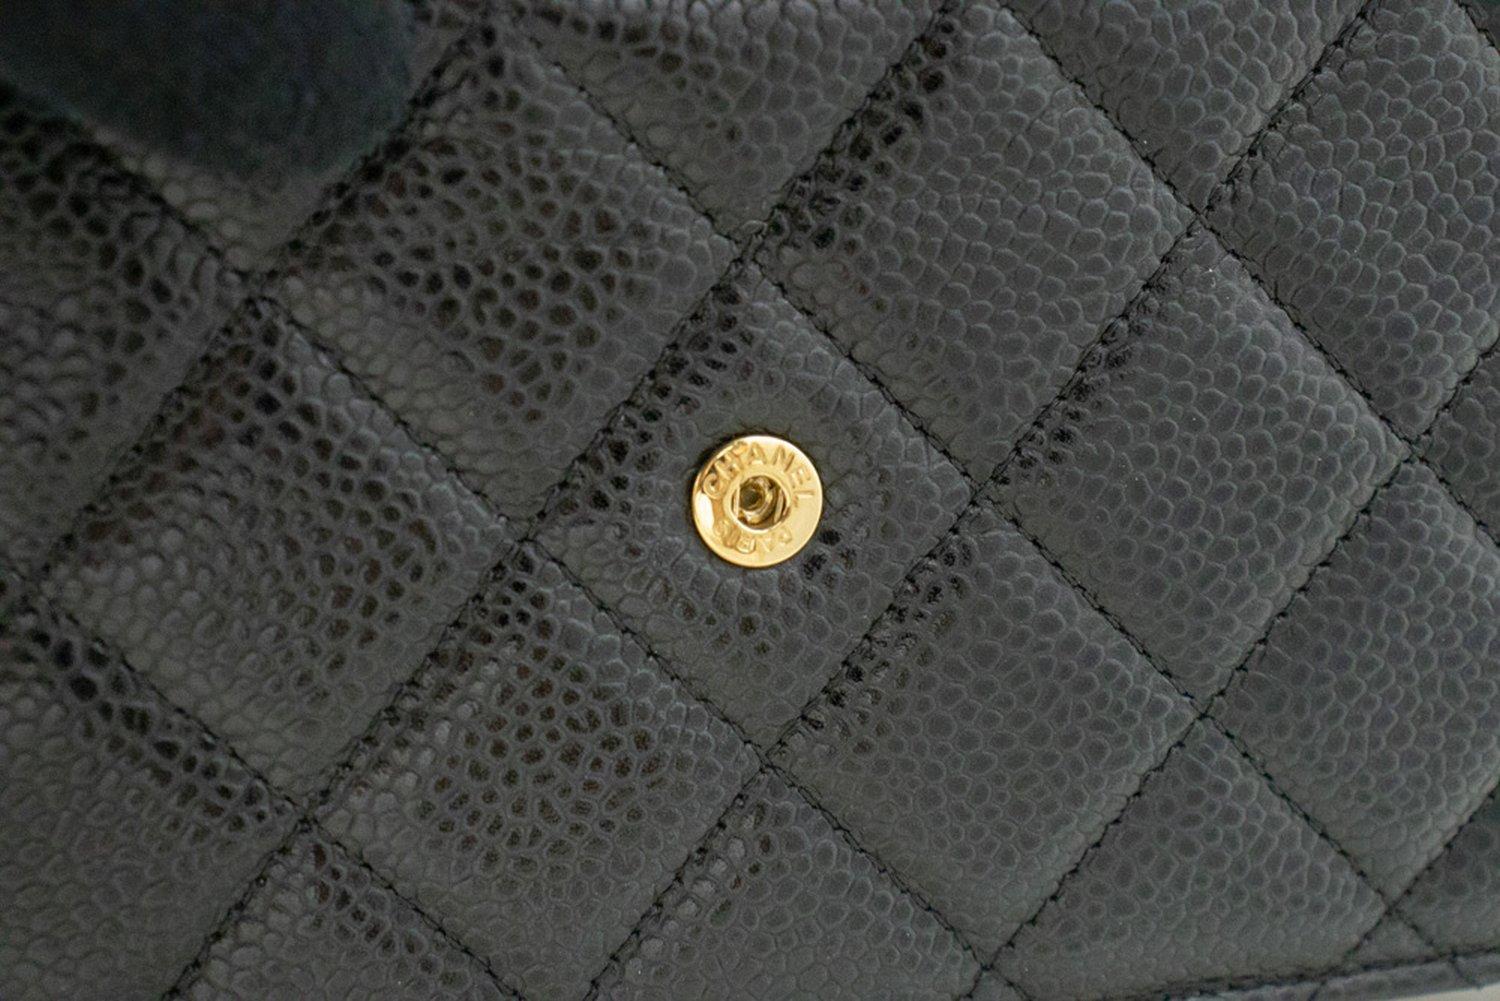 CHANEL Caviar WOC Wallet On Chain Black Shoulder Crossbody Bag 10